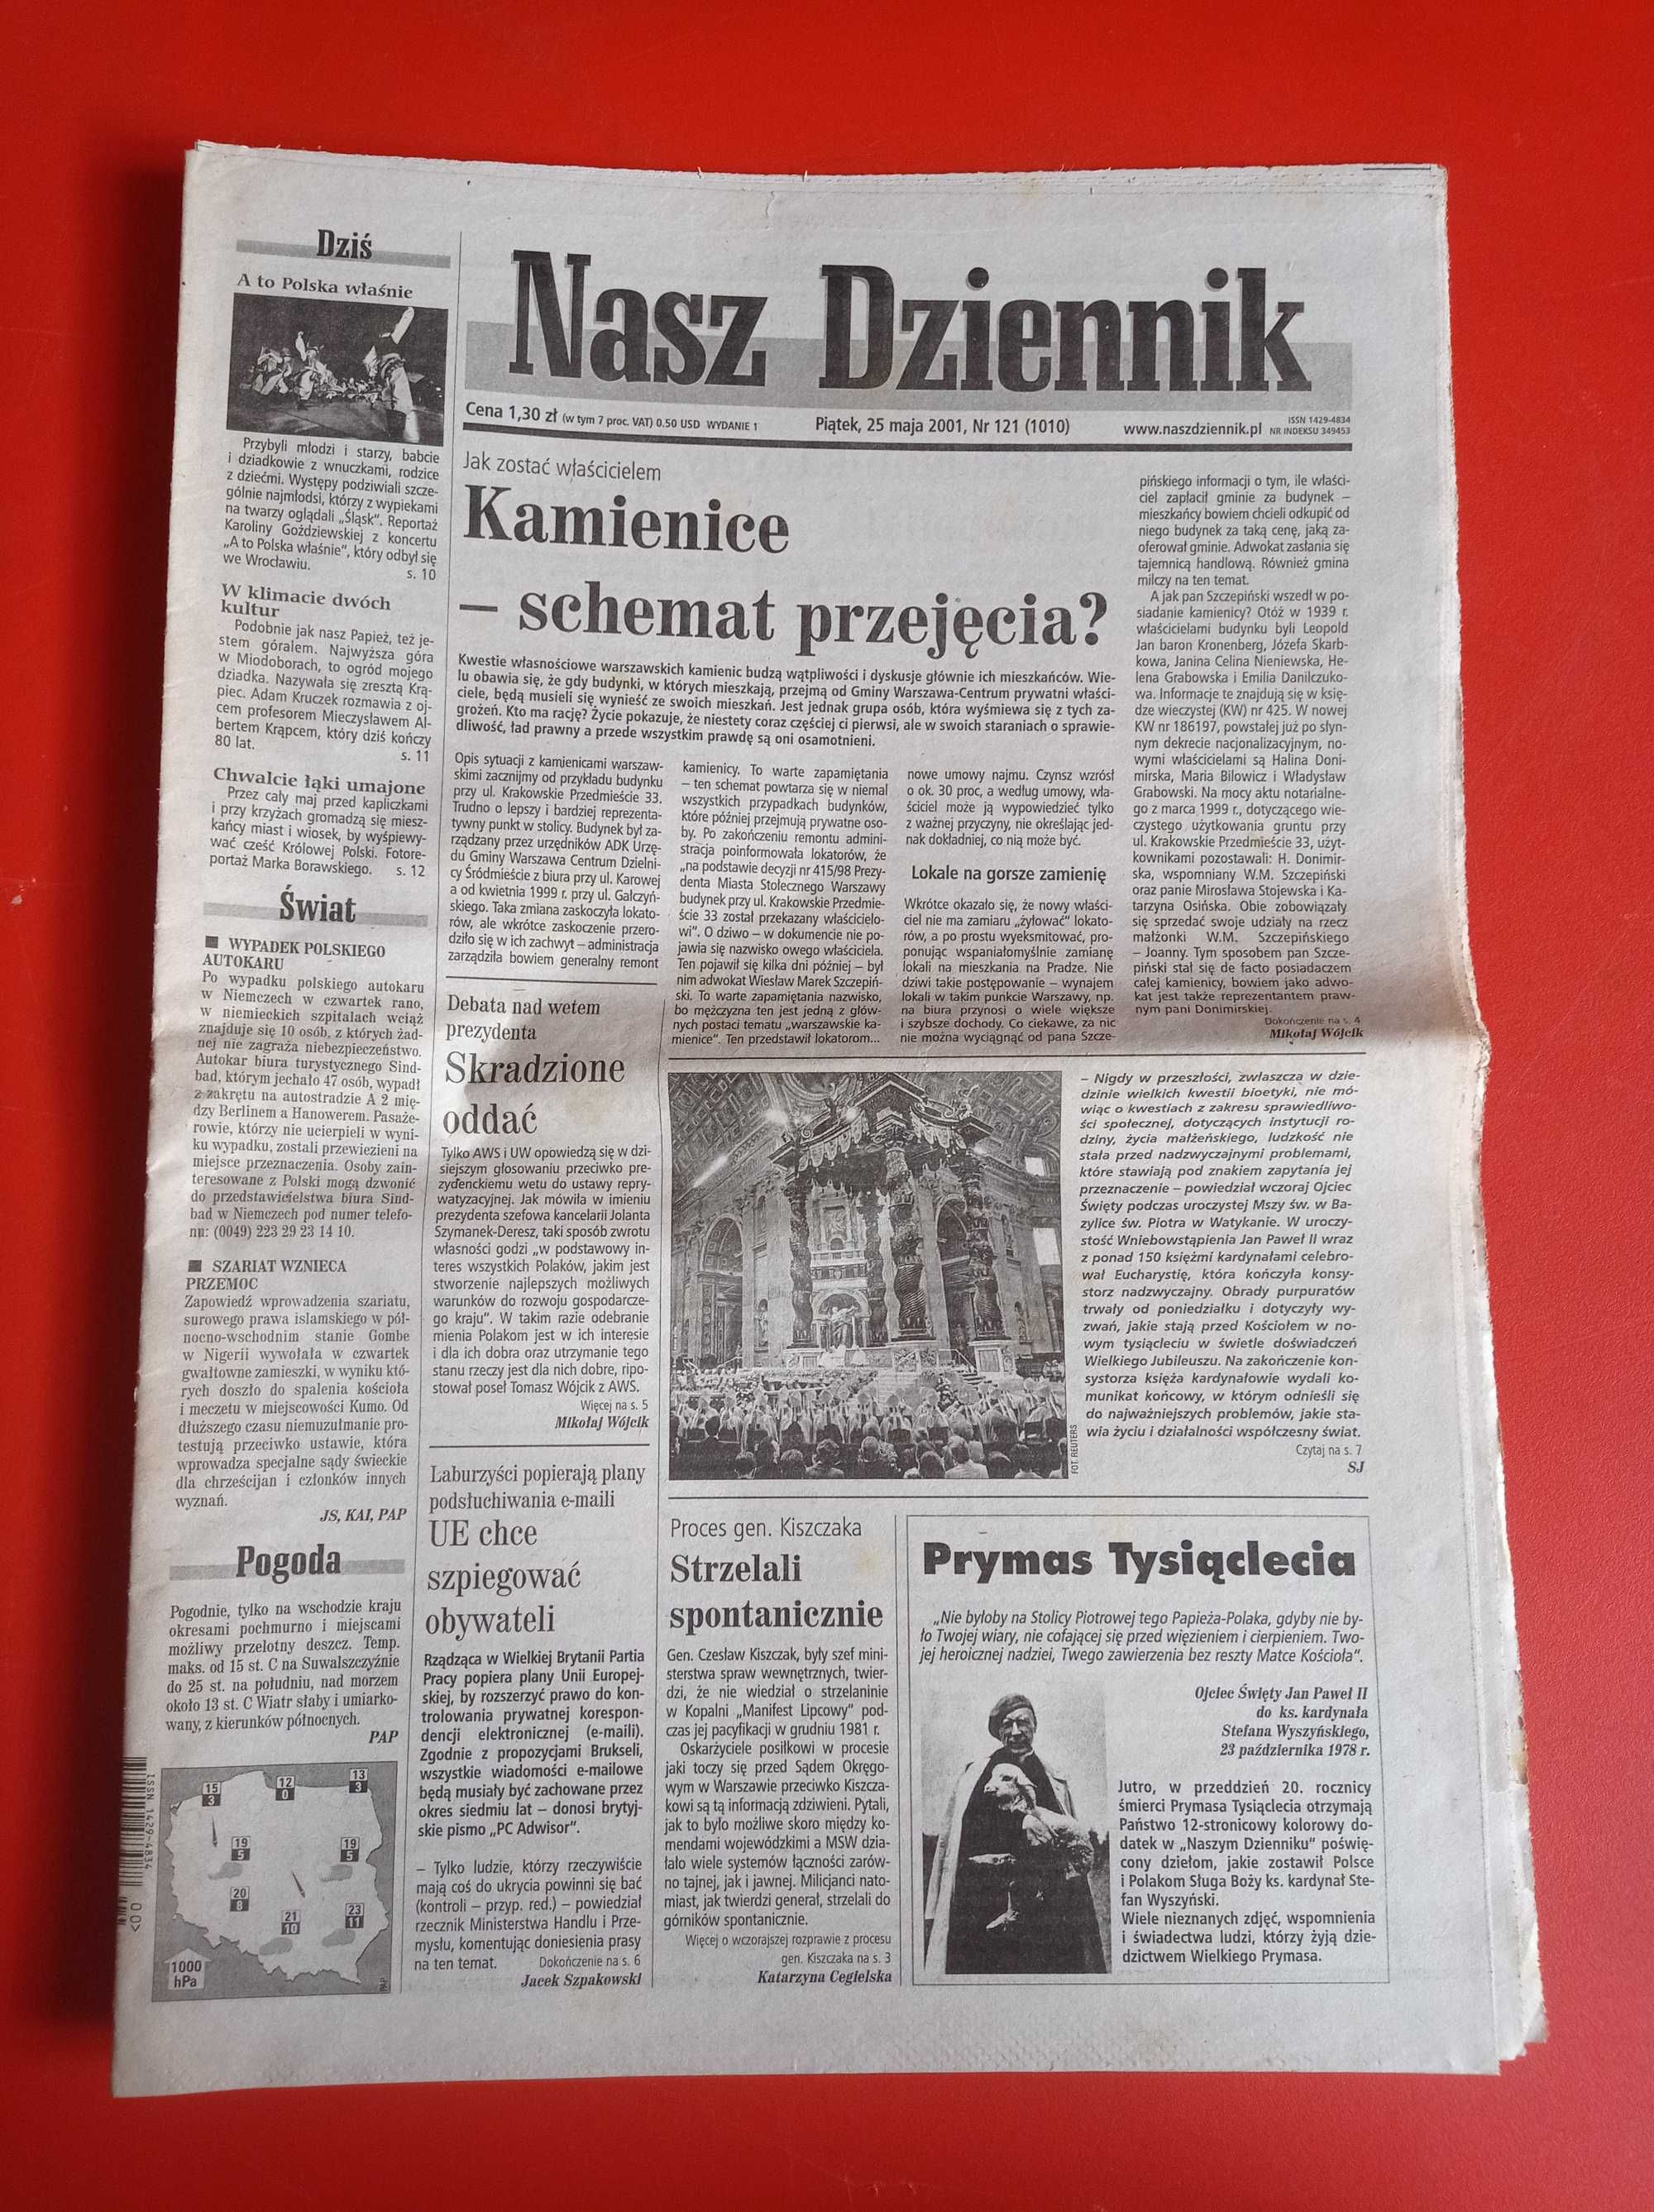 Nasz Dziennik, nr 121/2001, 25 maja 2001